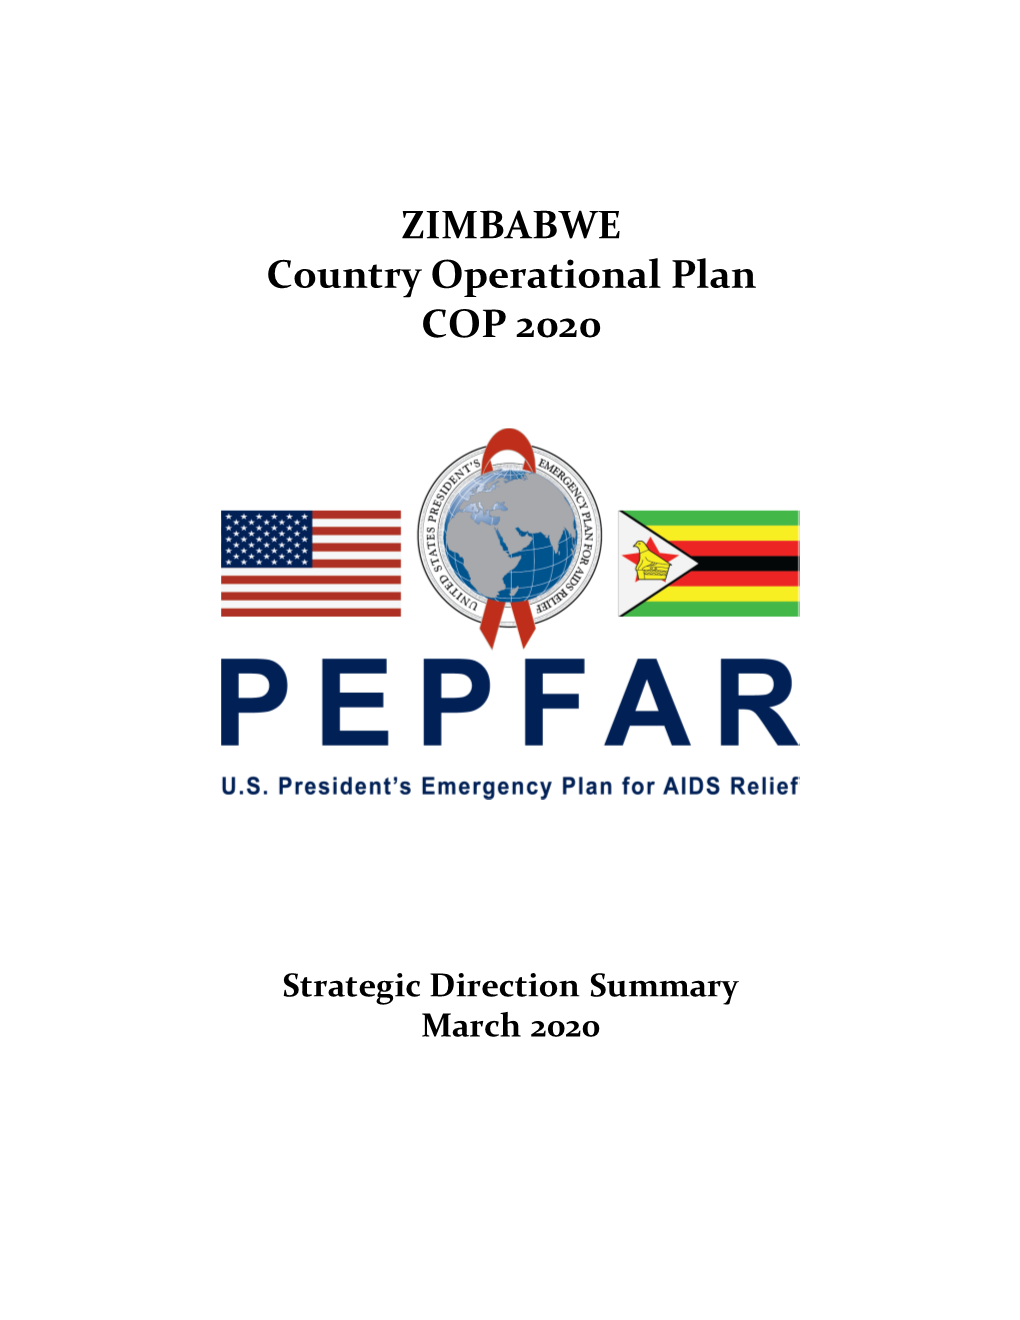 ZIMBABWE Country Operational Plan COP 2020